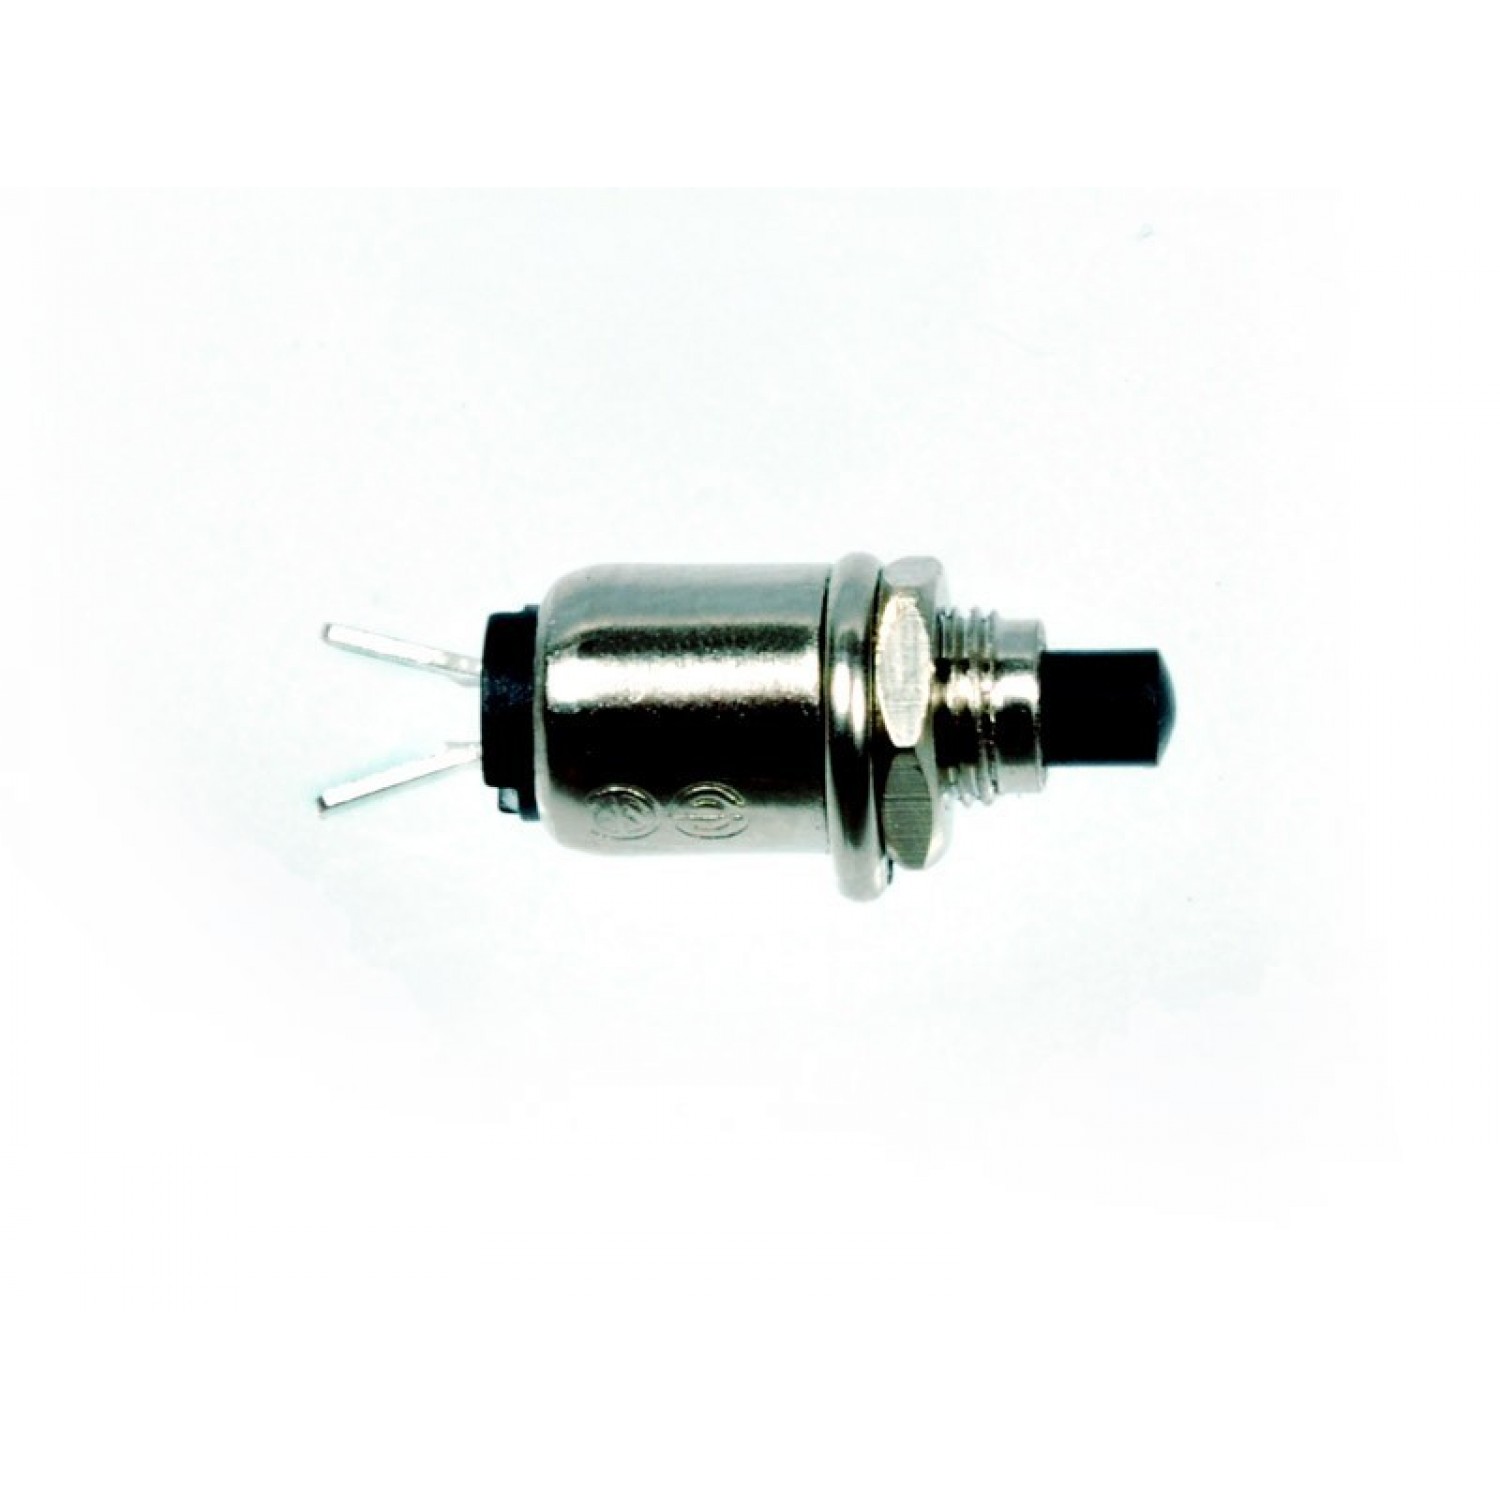 Thundermax- Relai de clignotant pour bouton poussoir - 12V- 1A-  21200085-EA4093 – Kustom Store Motorcycles